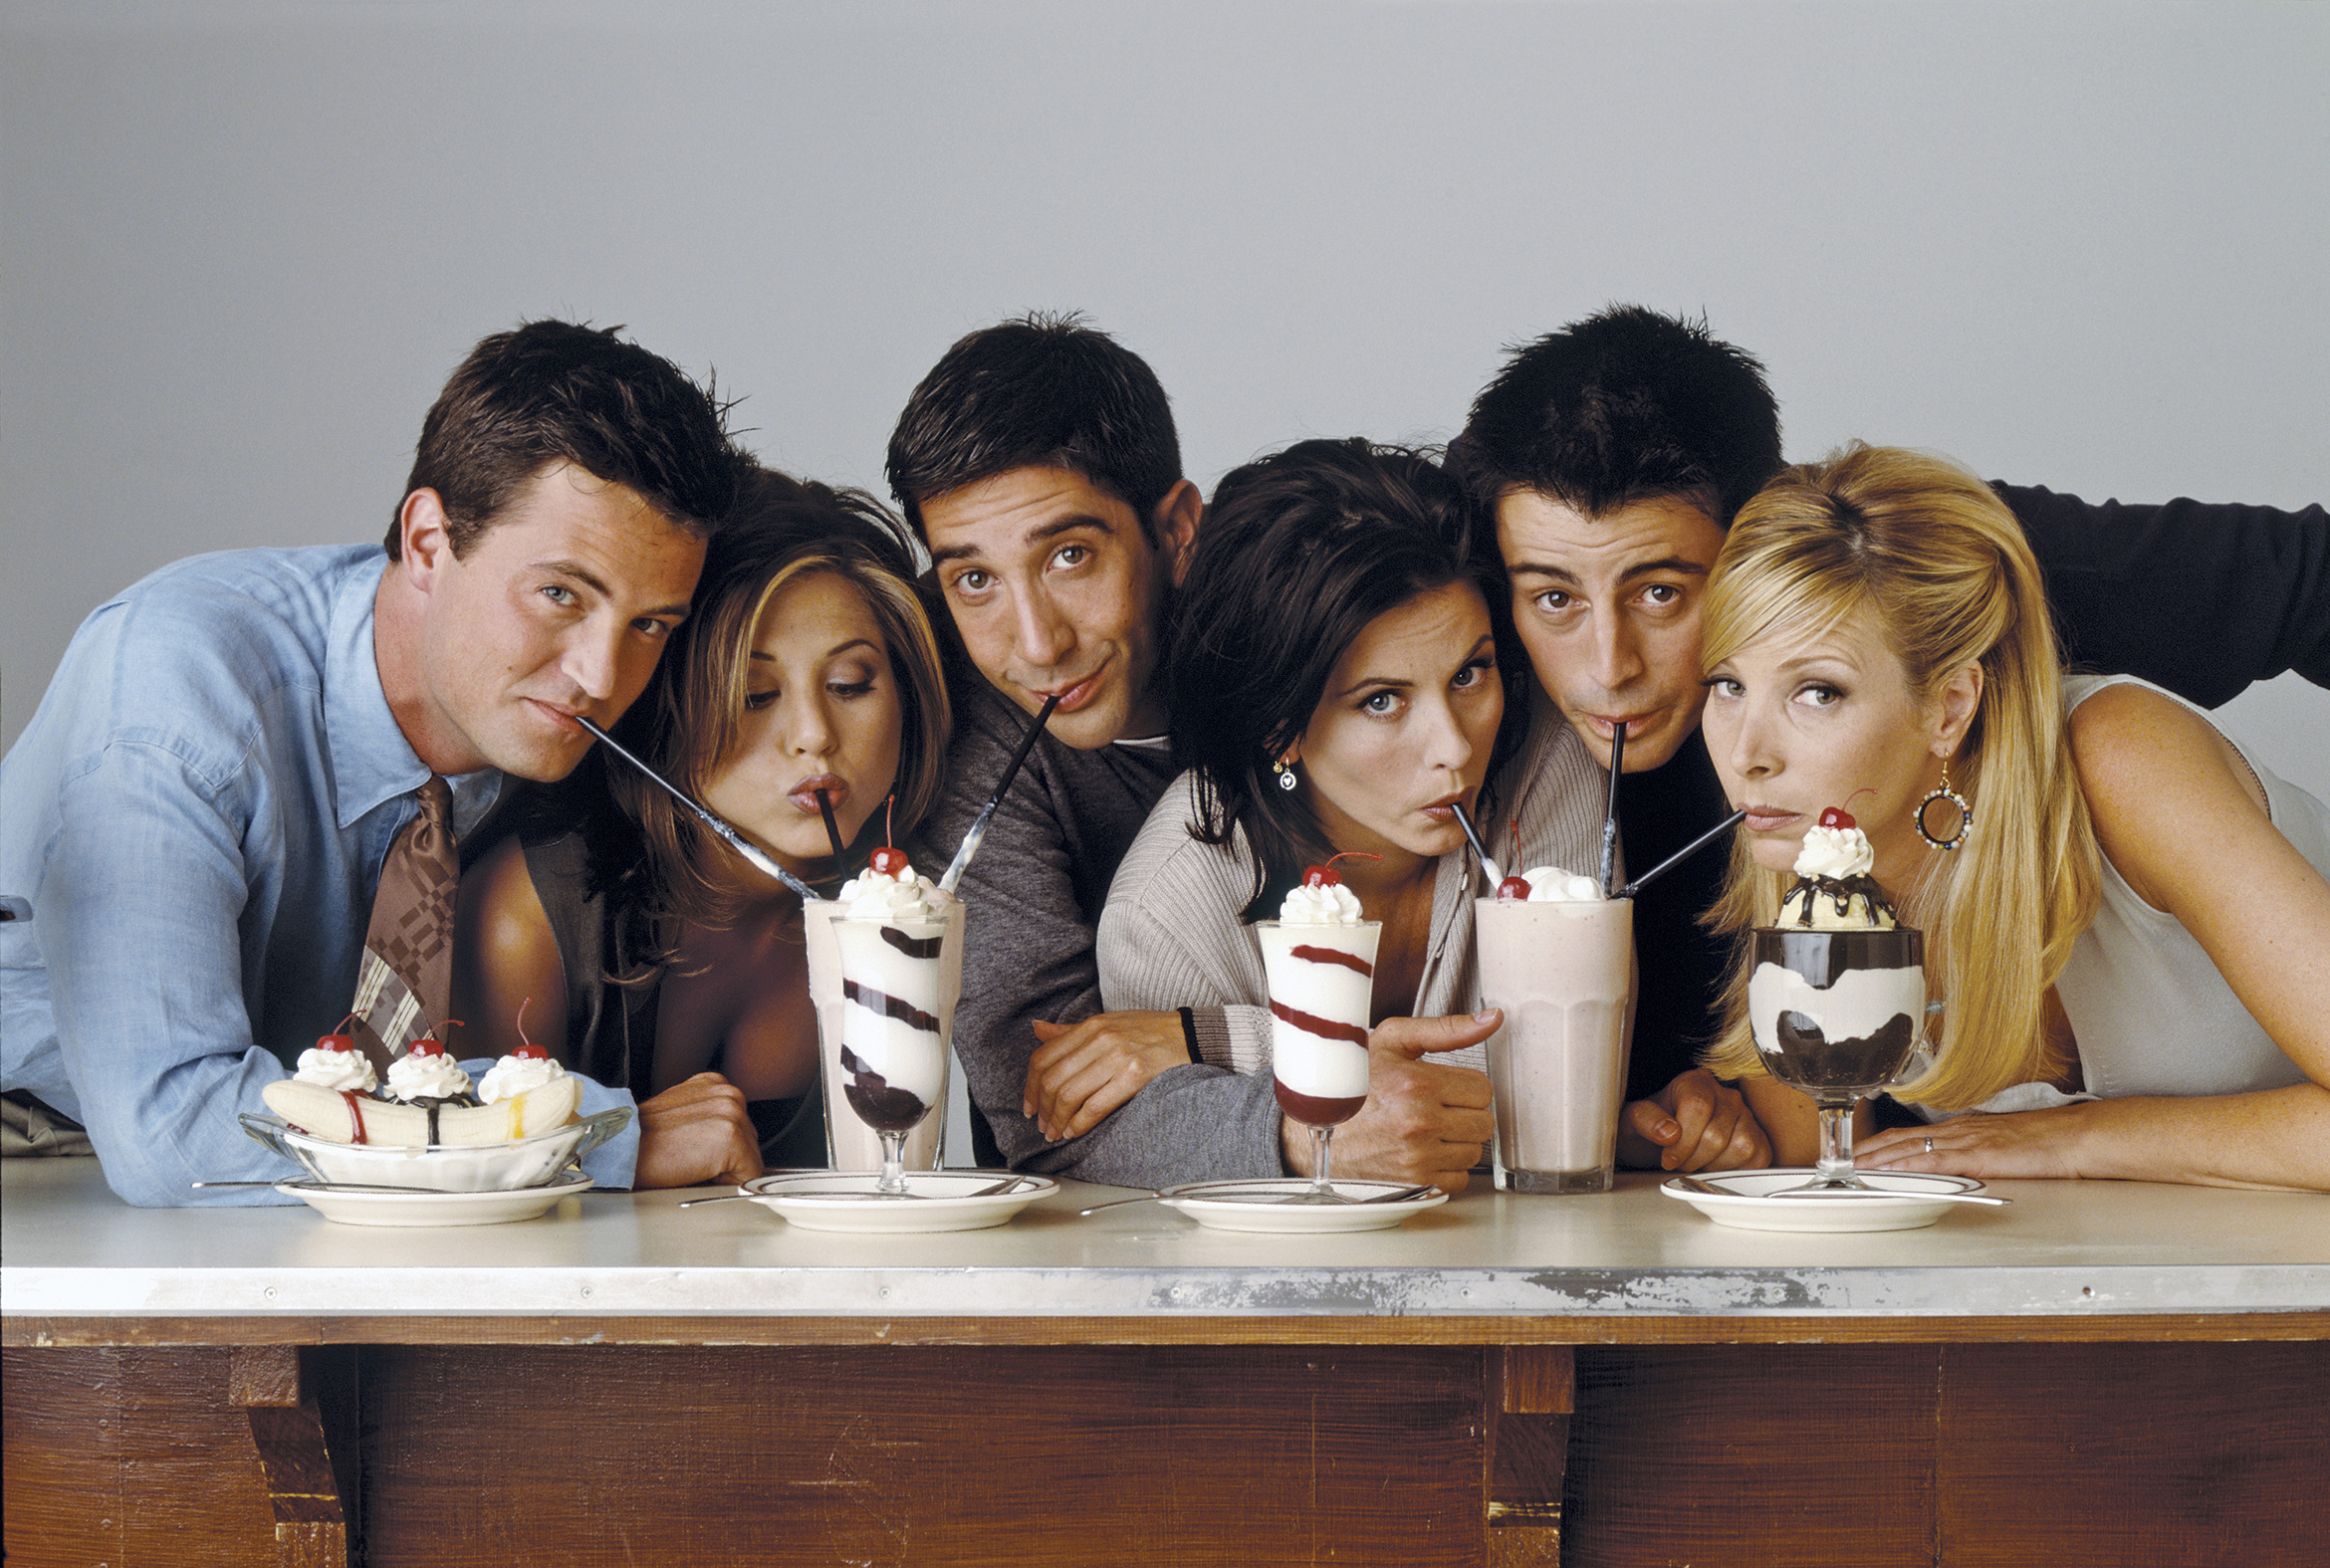 _Friends_ cast drinking milkshakes